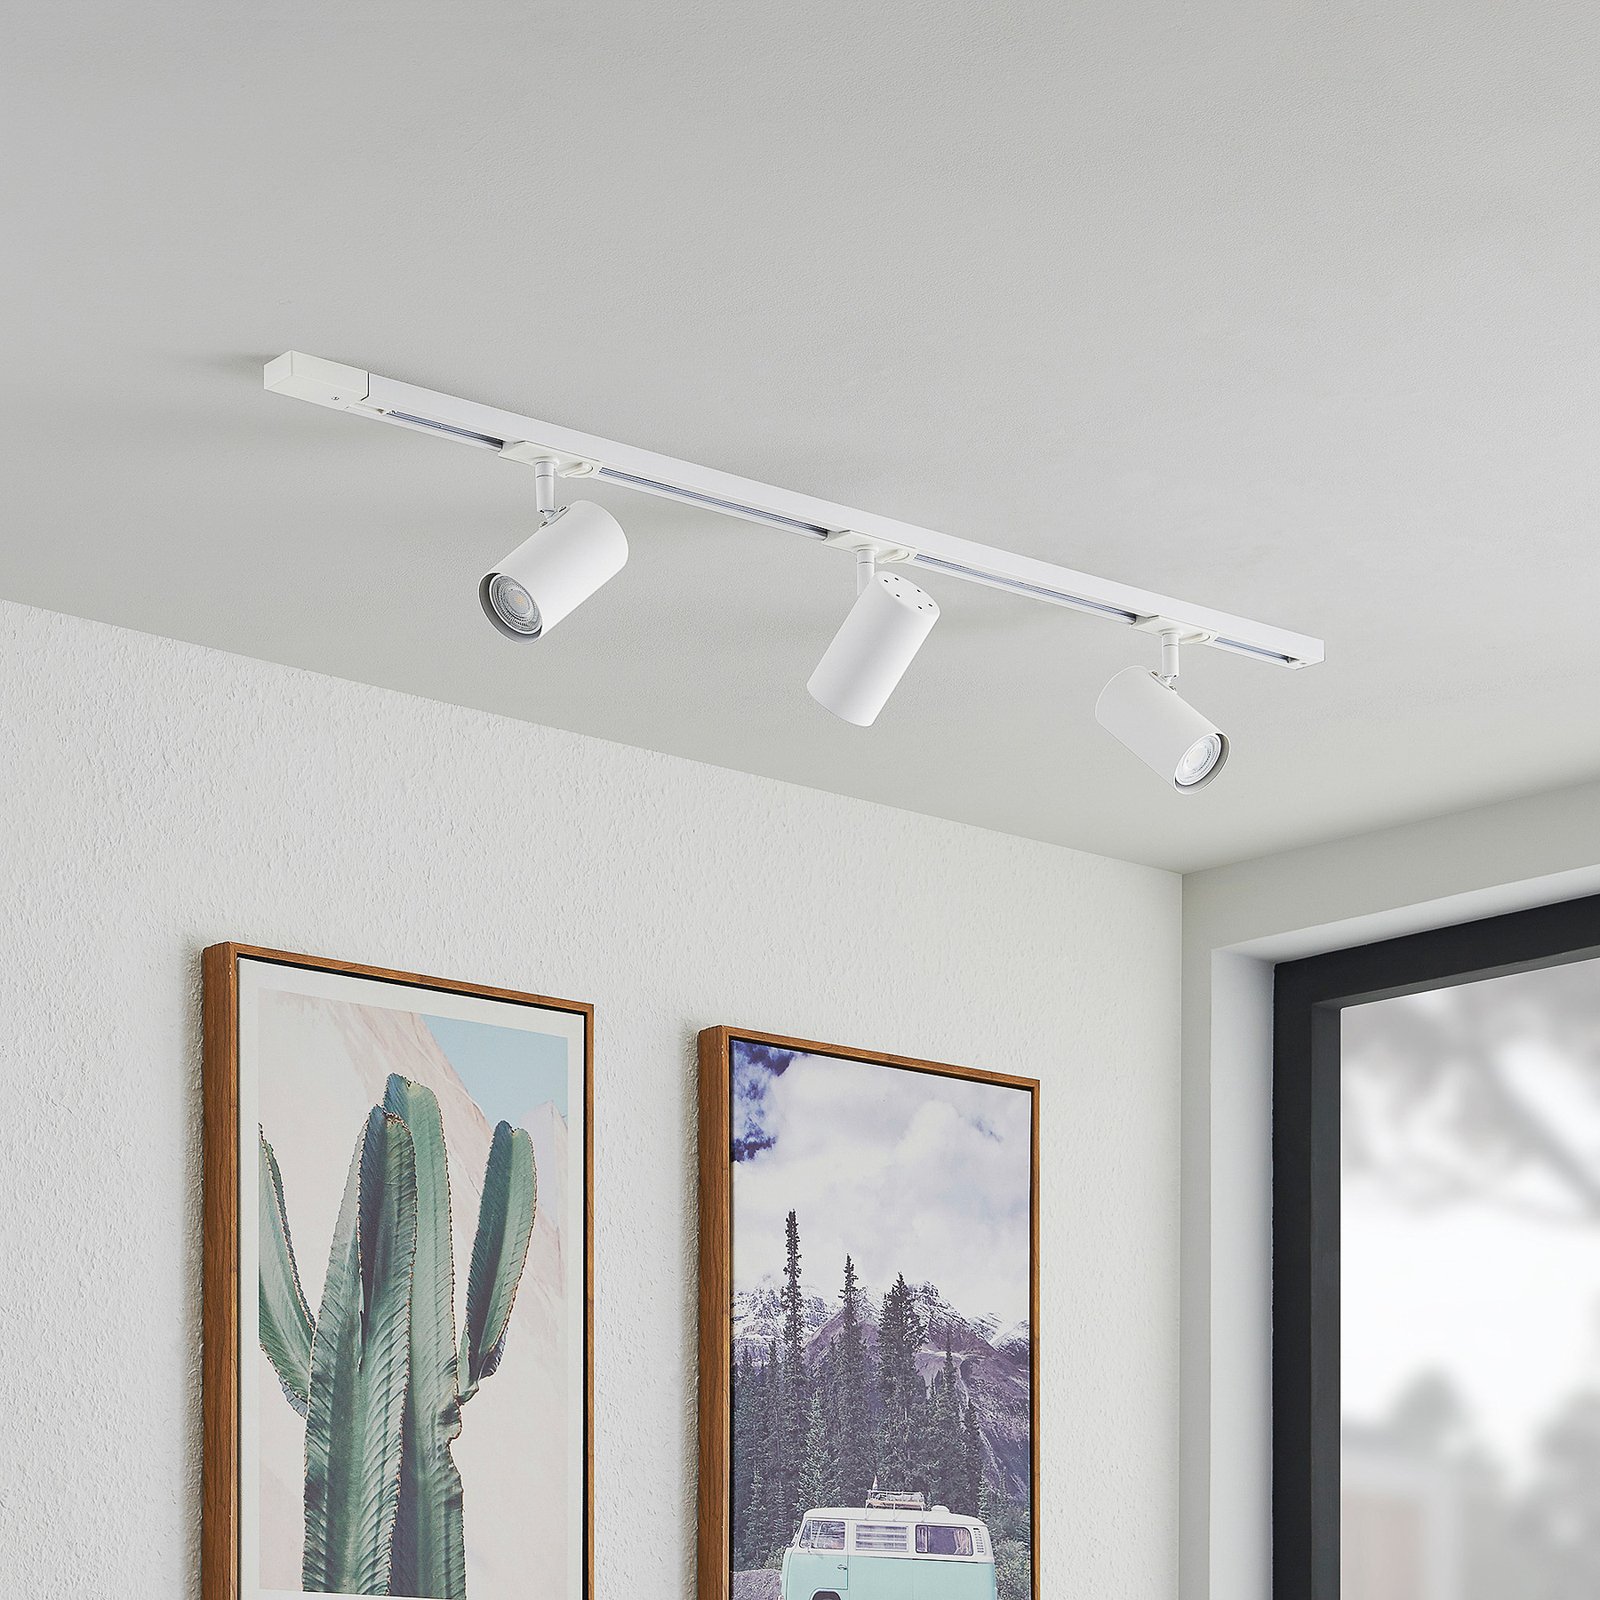 Lindby Sohil track lighting system, white, 3-bulb